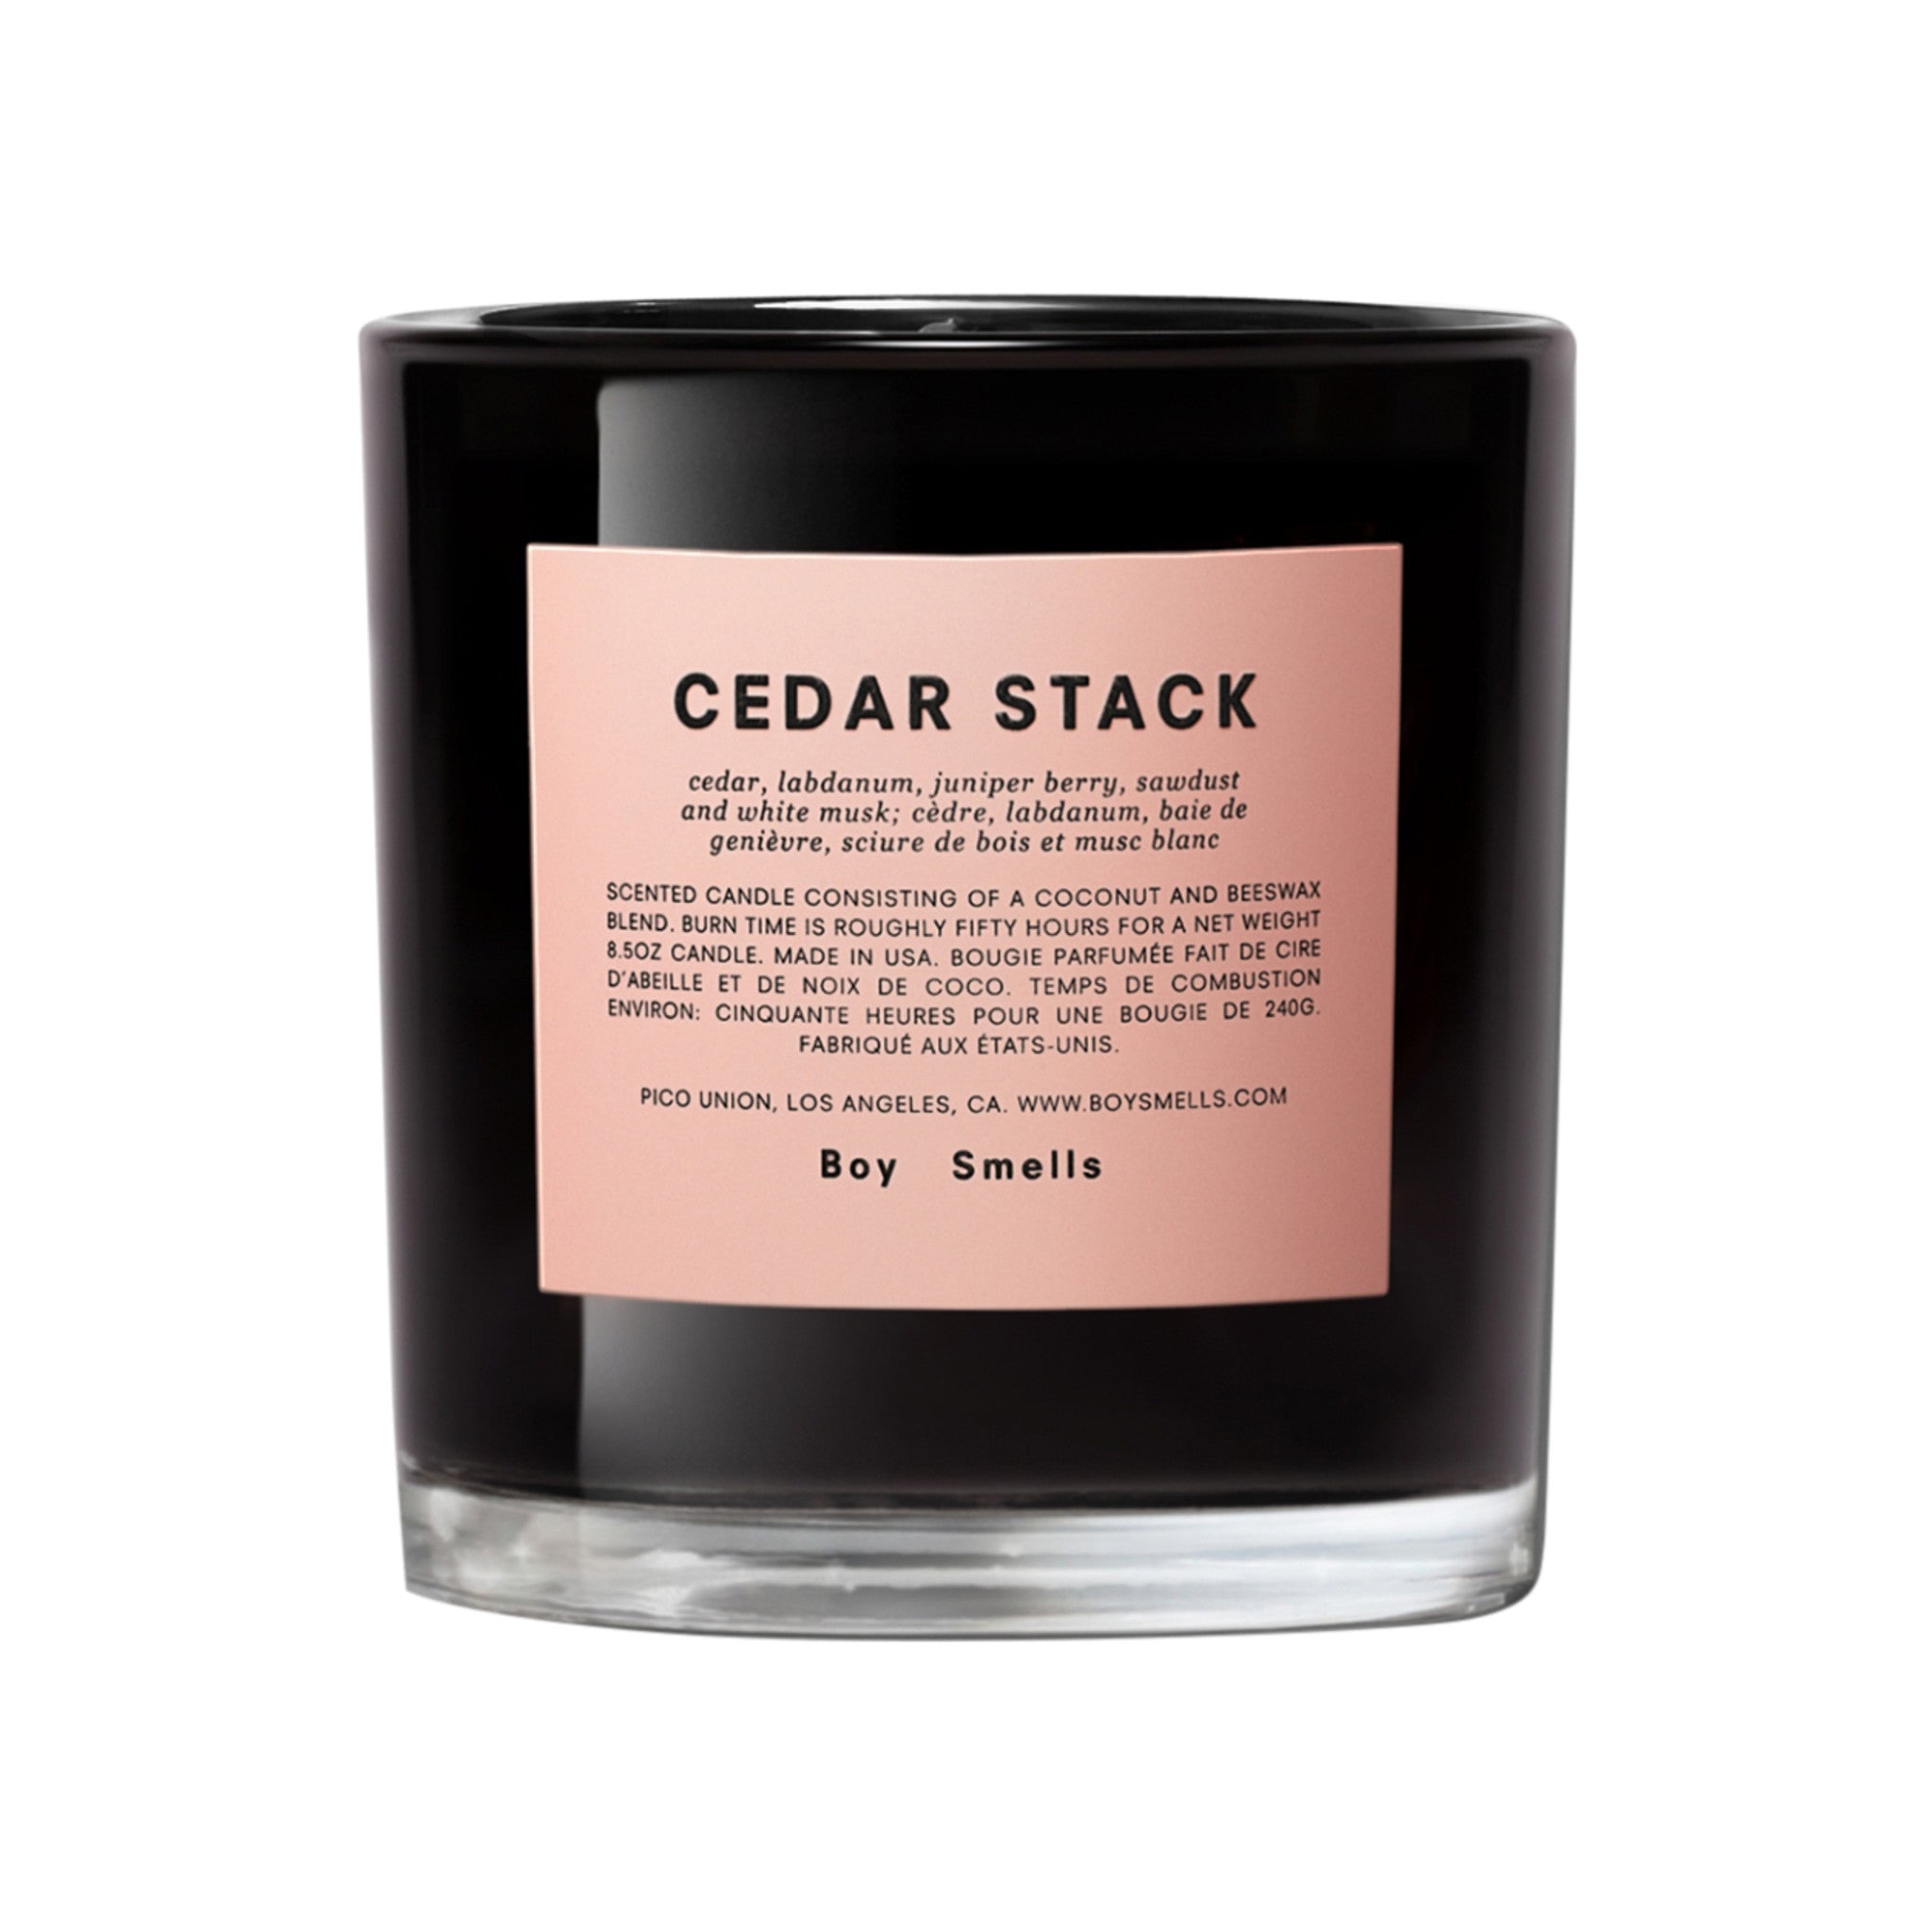 Boy Smells Cedar Stack Candle main image.